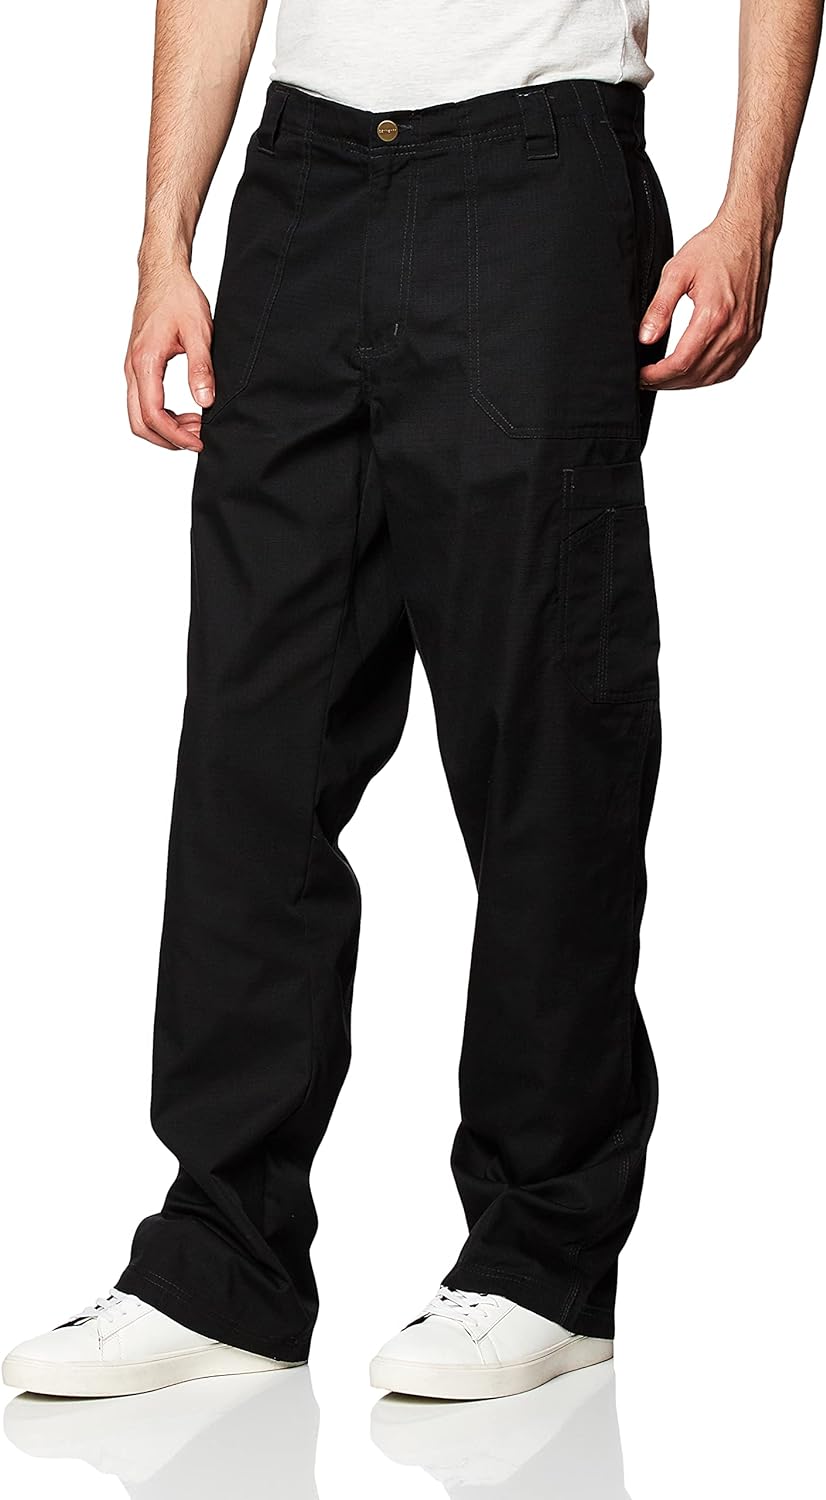 Carhartt Men's Ripstop Multi-Cargo Scrub Pant, Black, Smal - $26.39